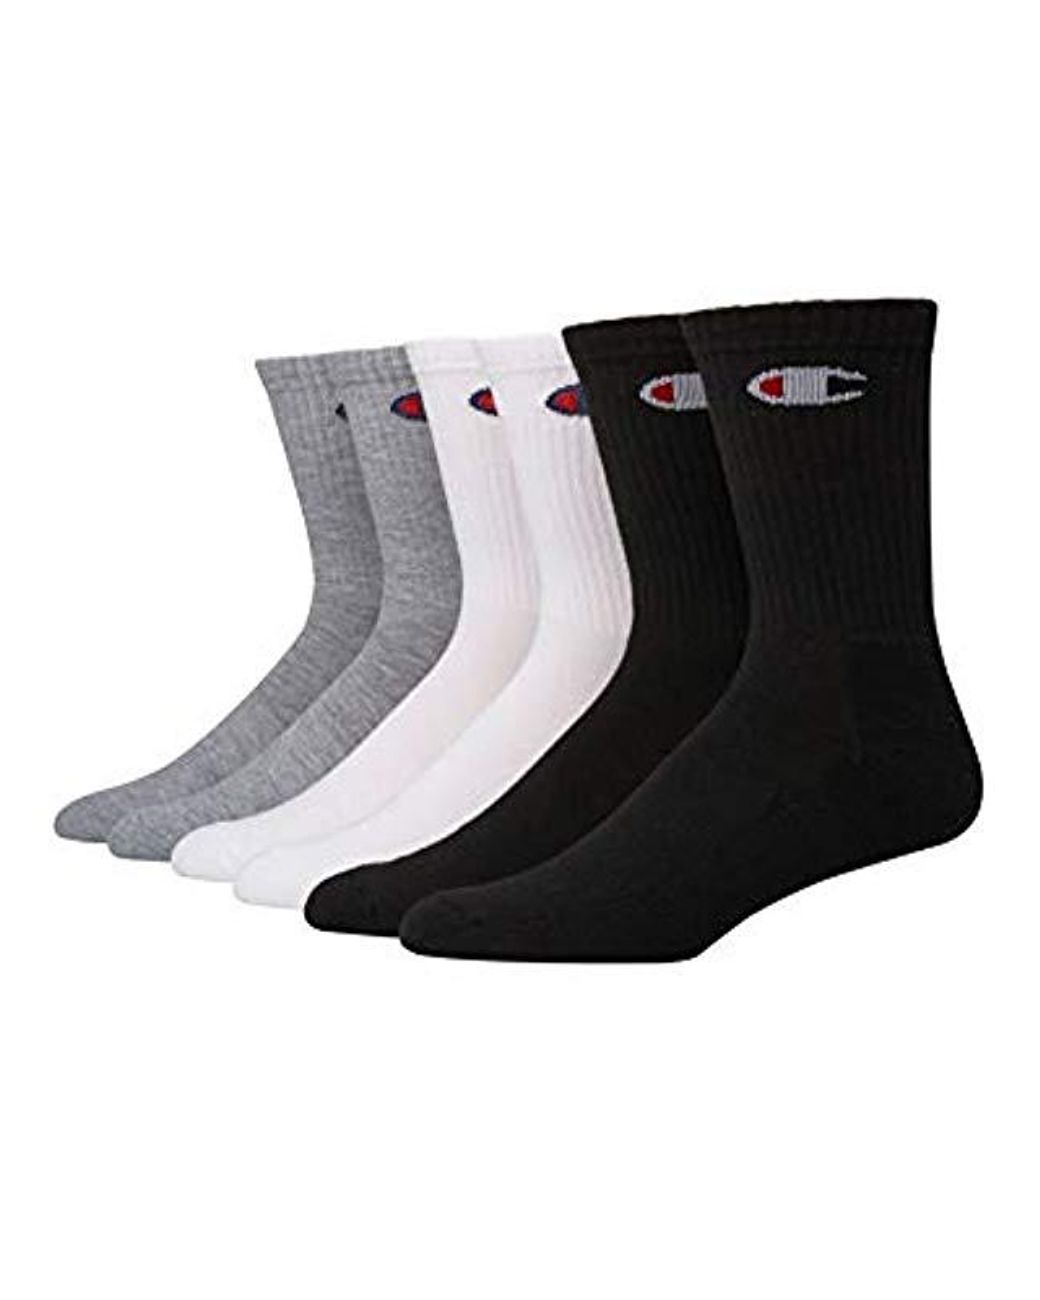 c9 running socks